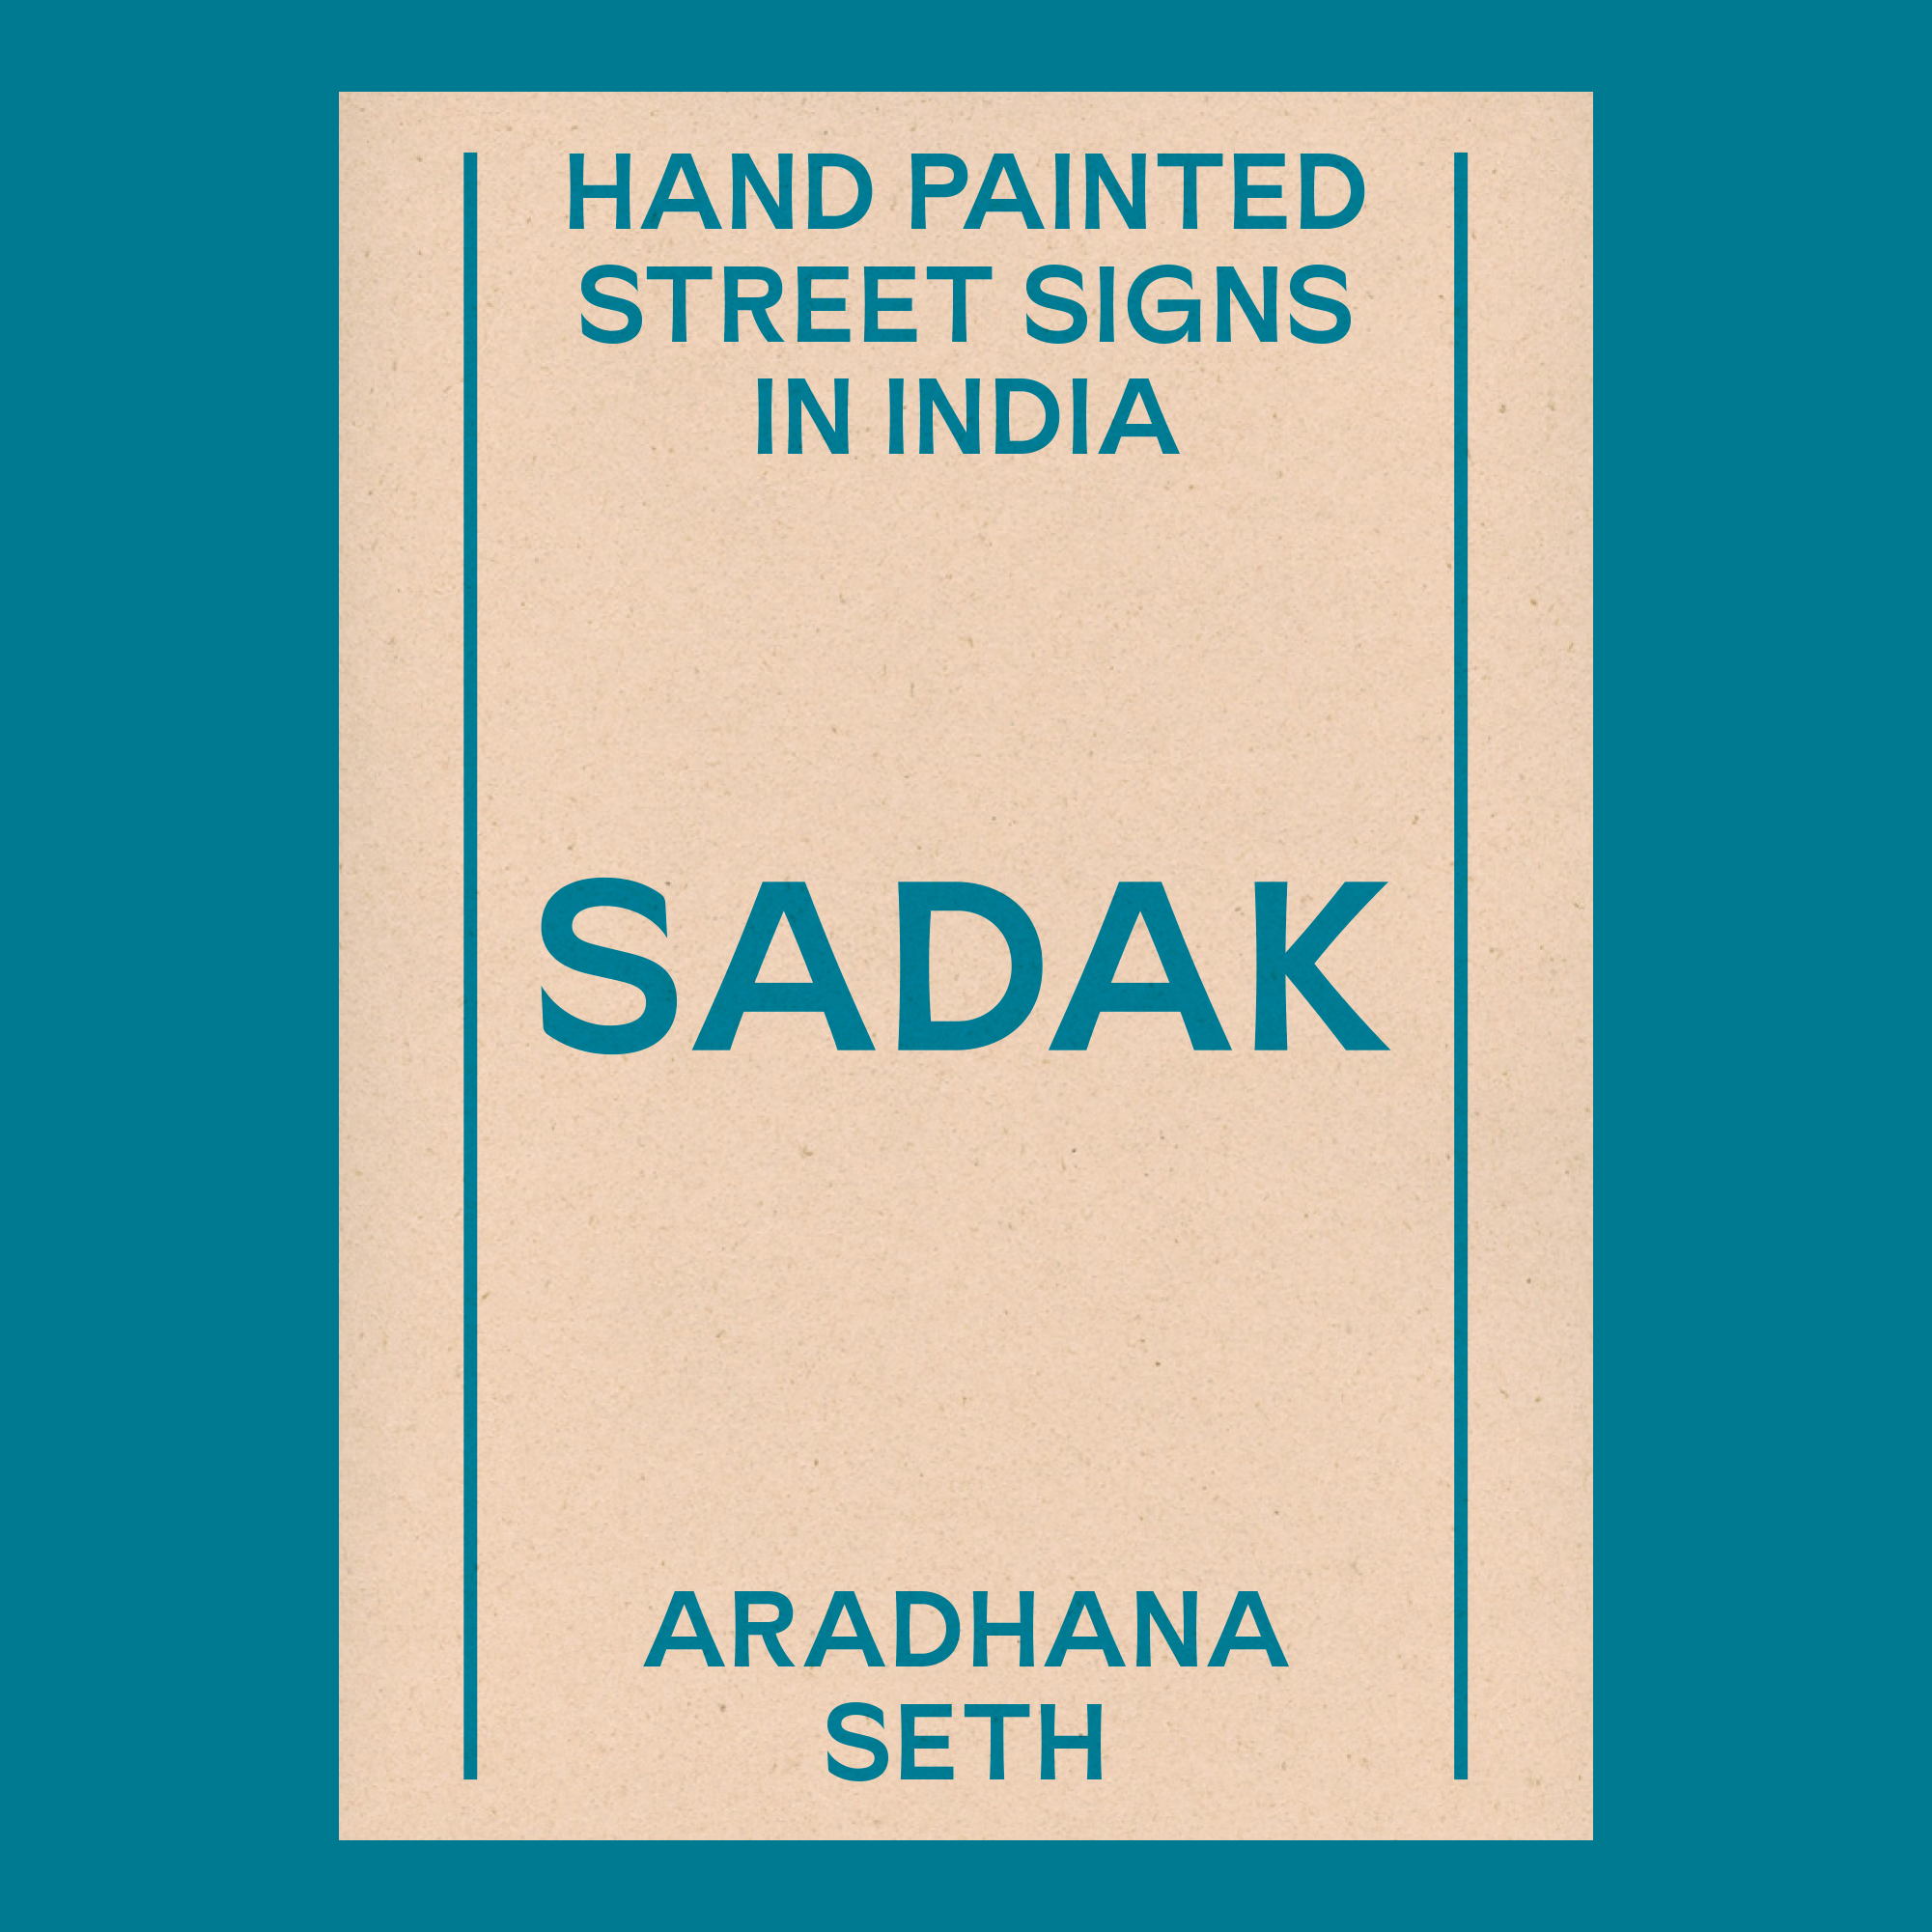 Sadak  Hand painted street signs in India